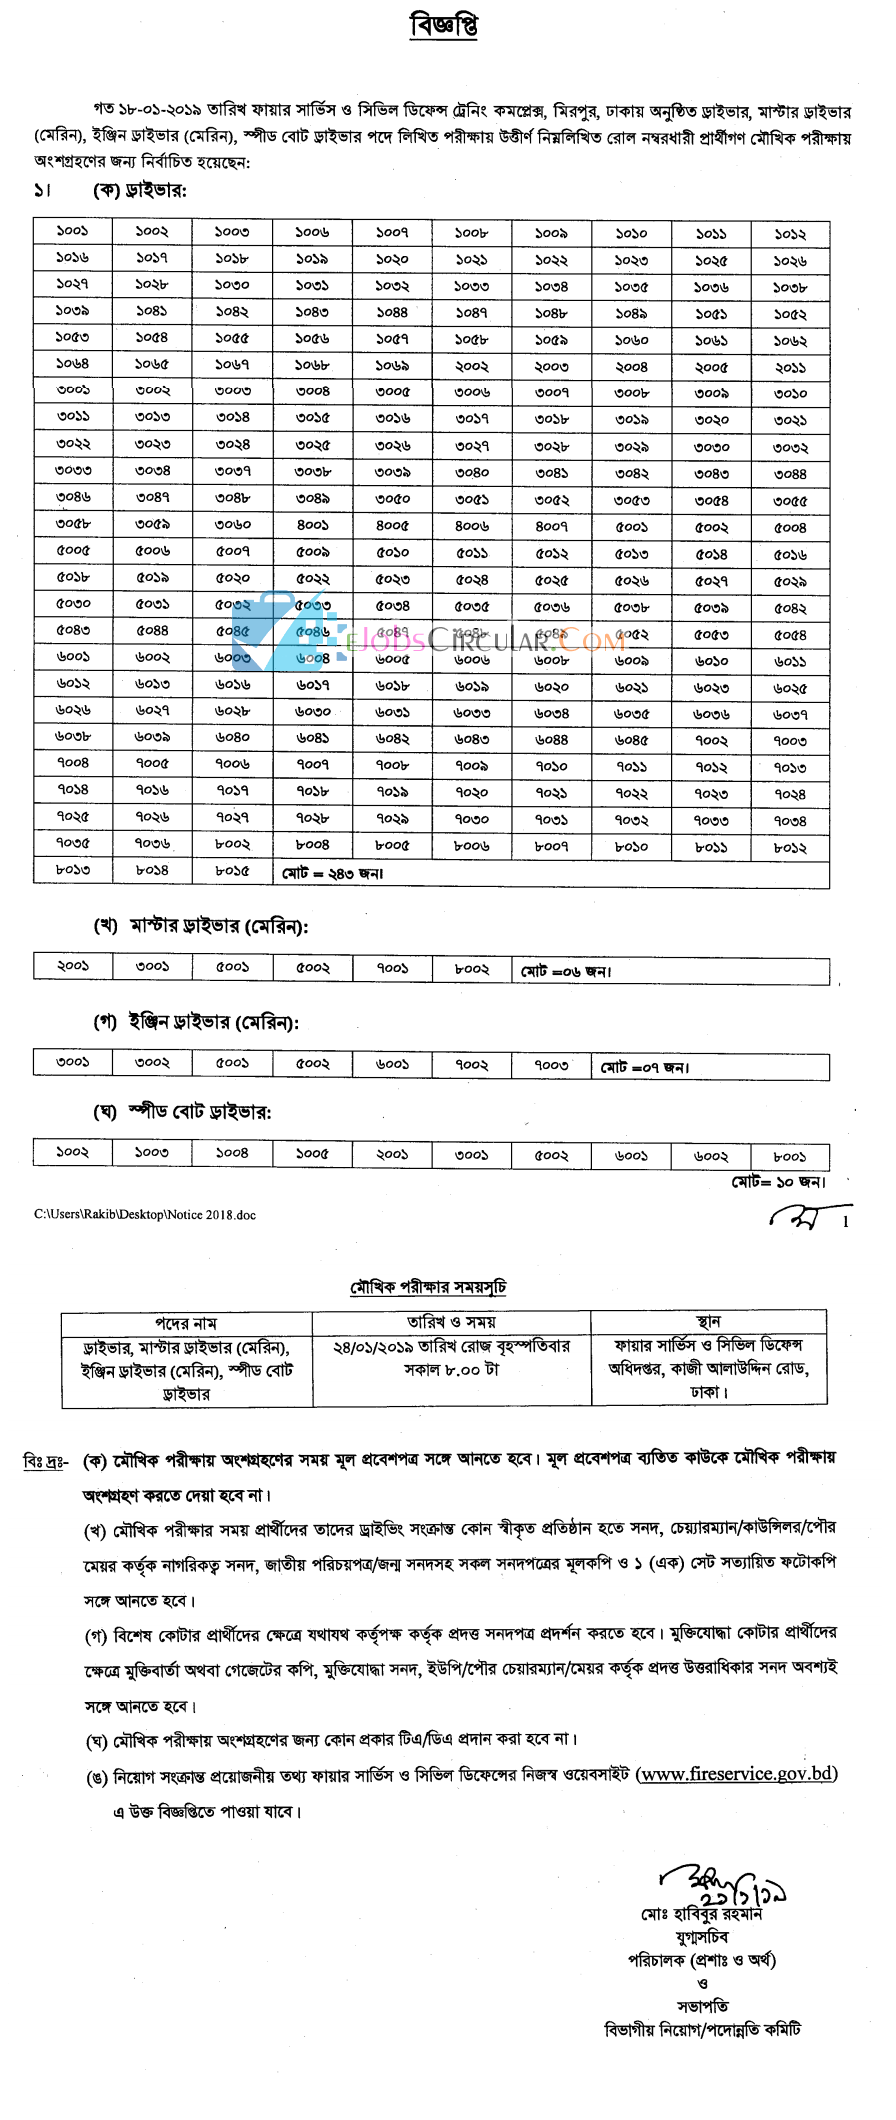 Bangladesh Fire Service & Civil Defense Exam Notice 2019